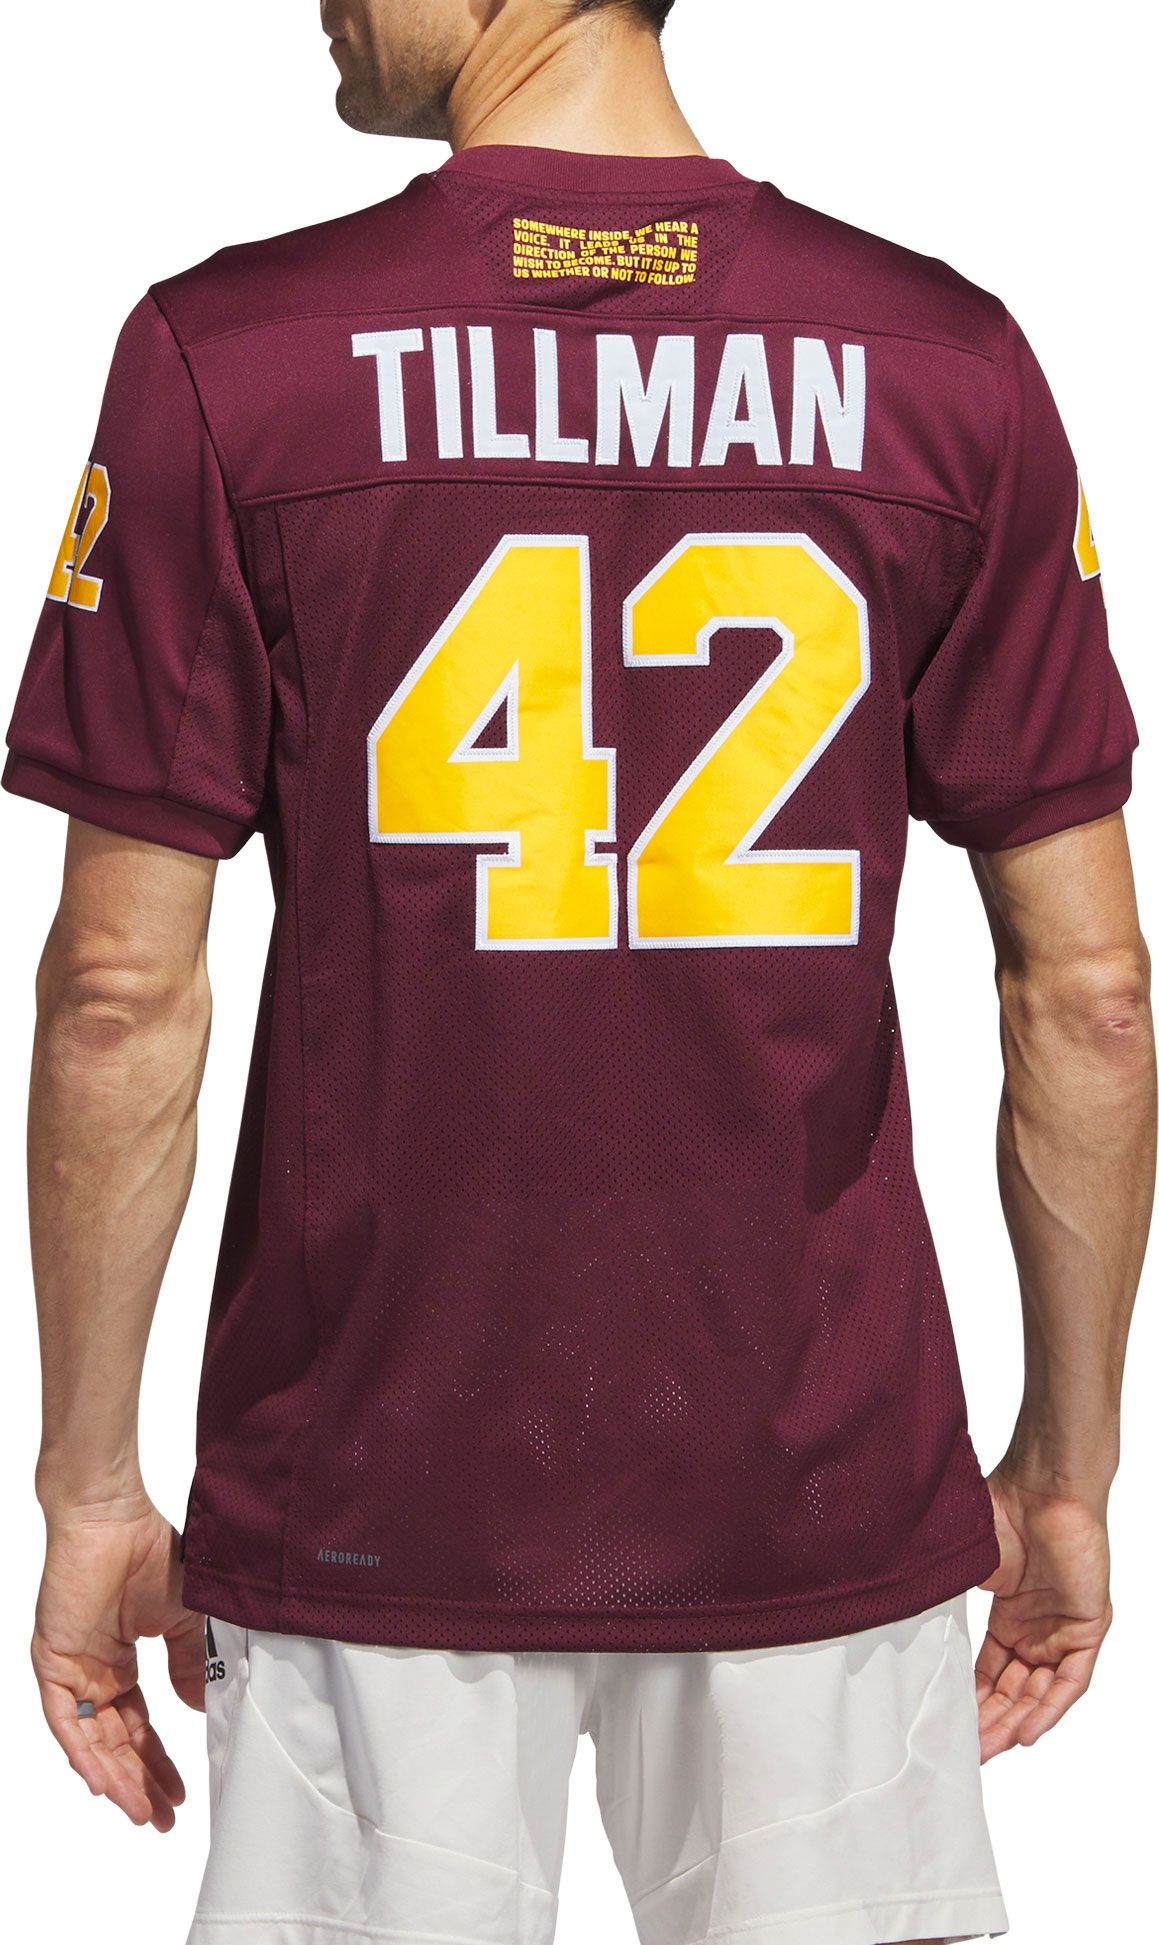 LOOK: Pat Tillman practice jersey part of Arizona State adidas